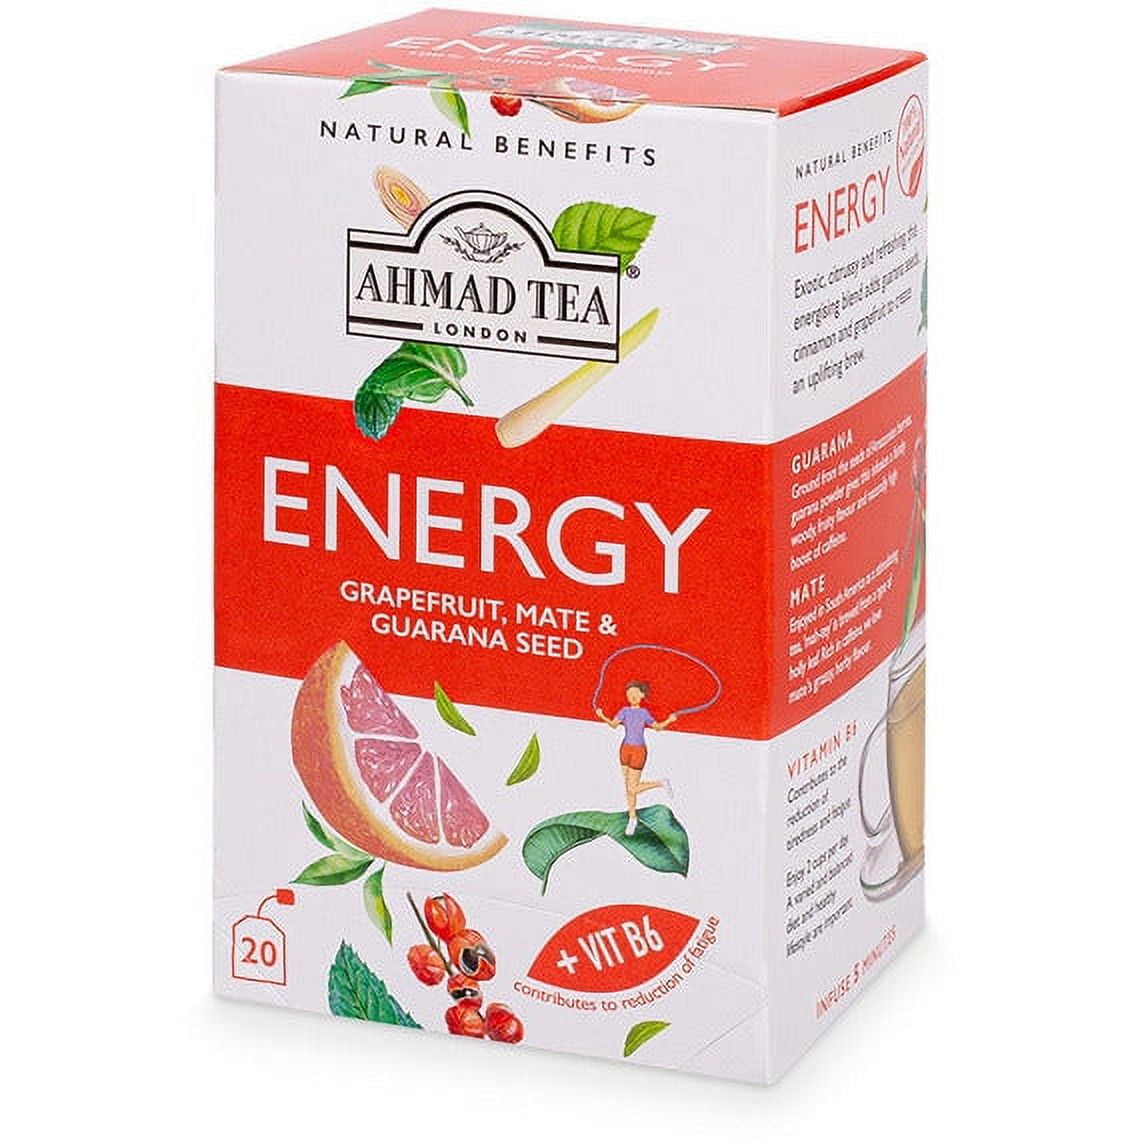 AHMAD Herbal & Fruit Tea 20 bags - 8 Flavours to Choice !